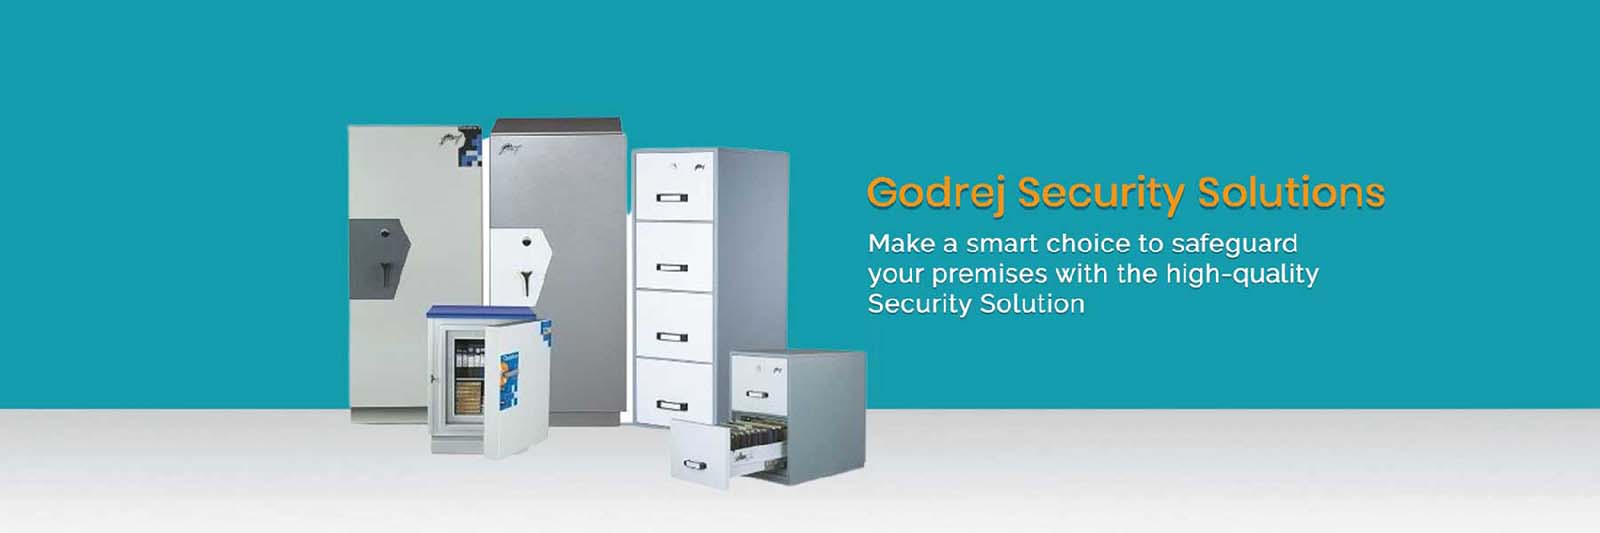 Godrej Security Solutions in Dwarka Sector 17